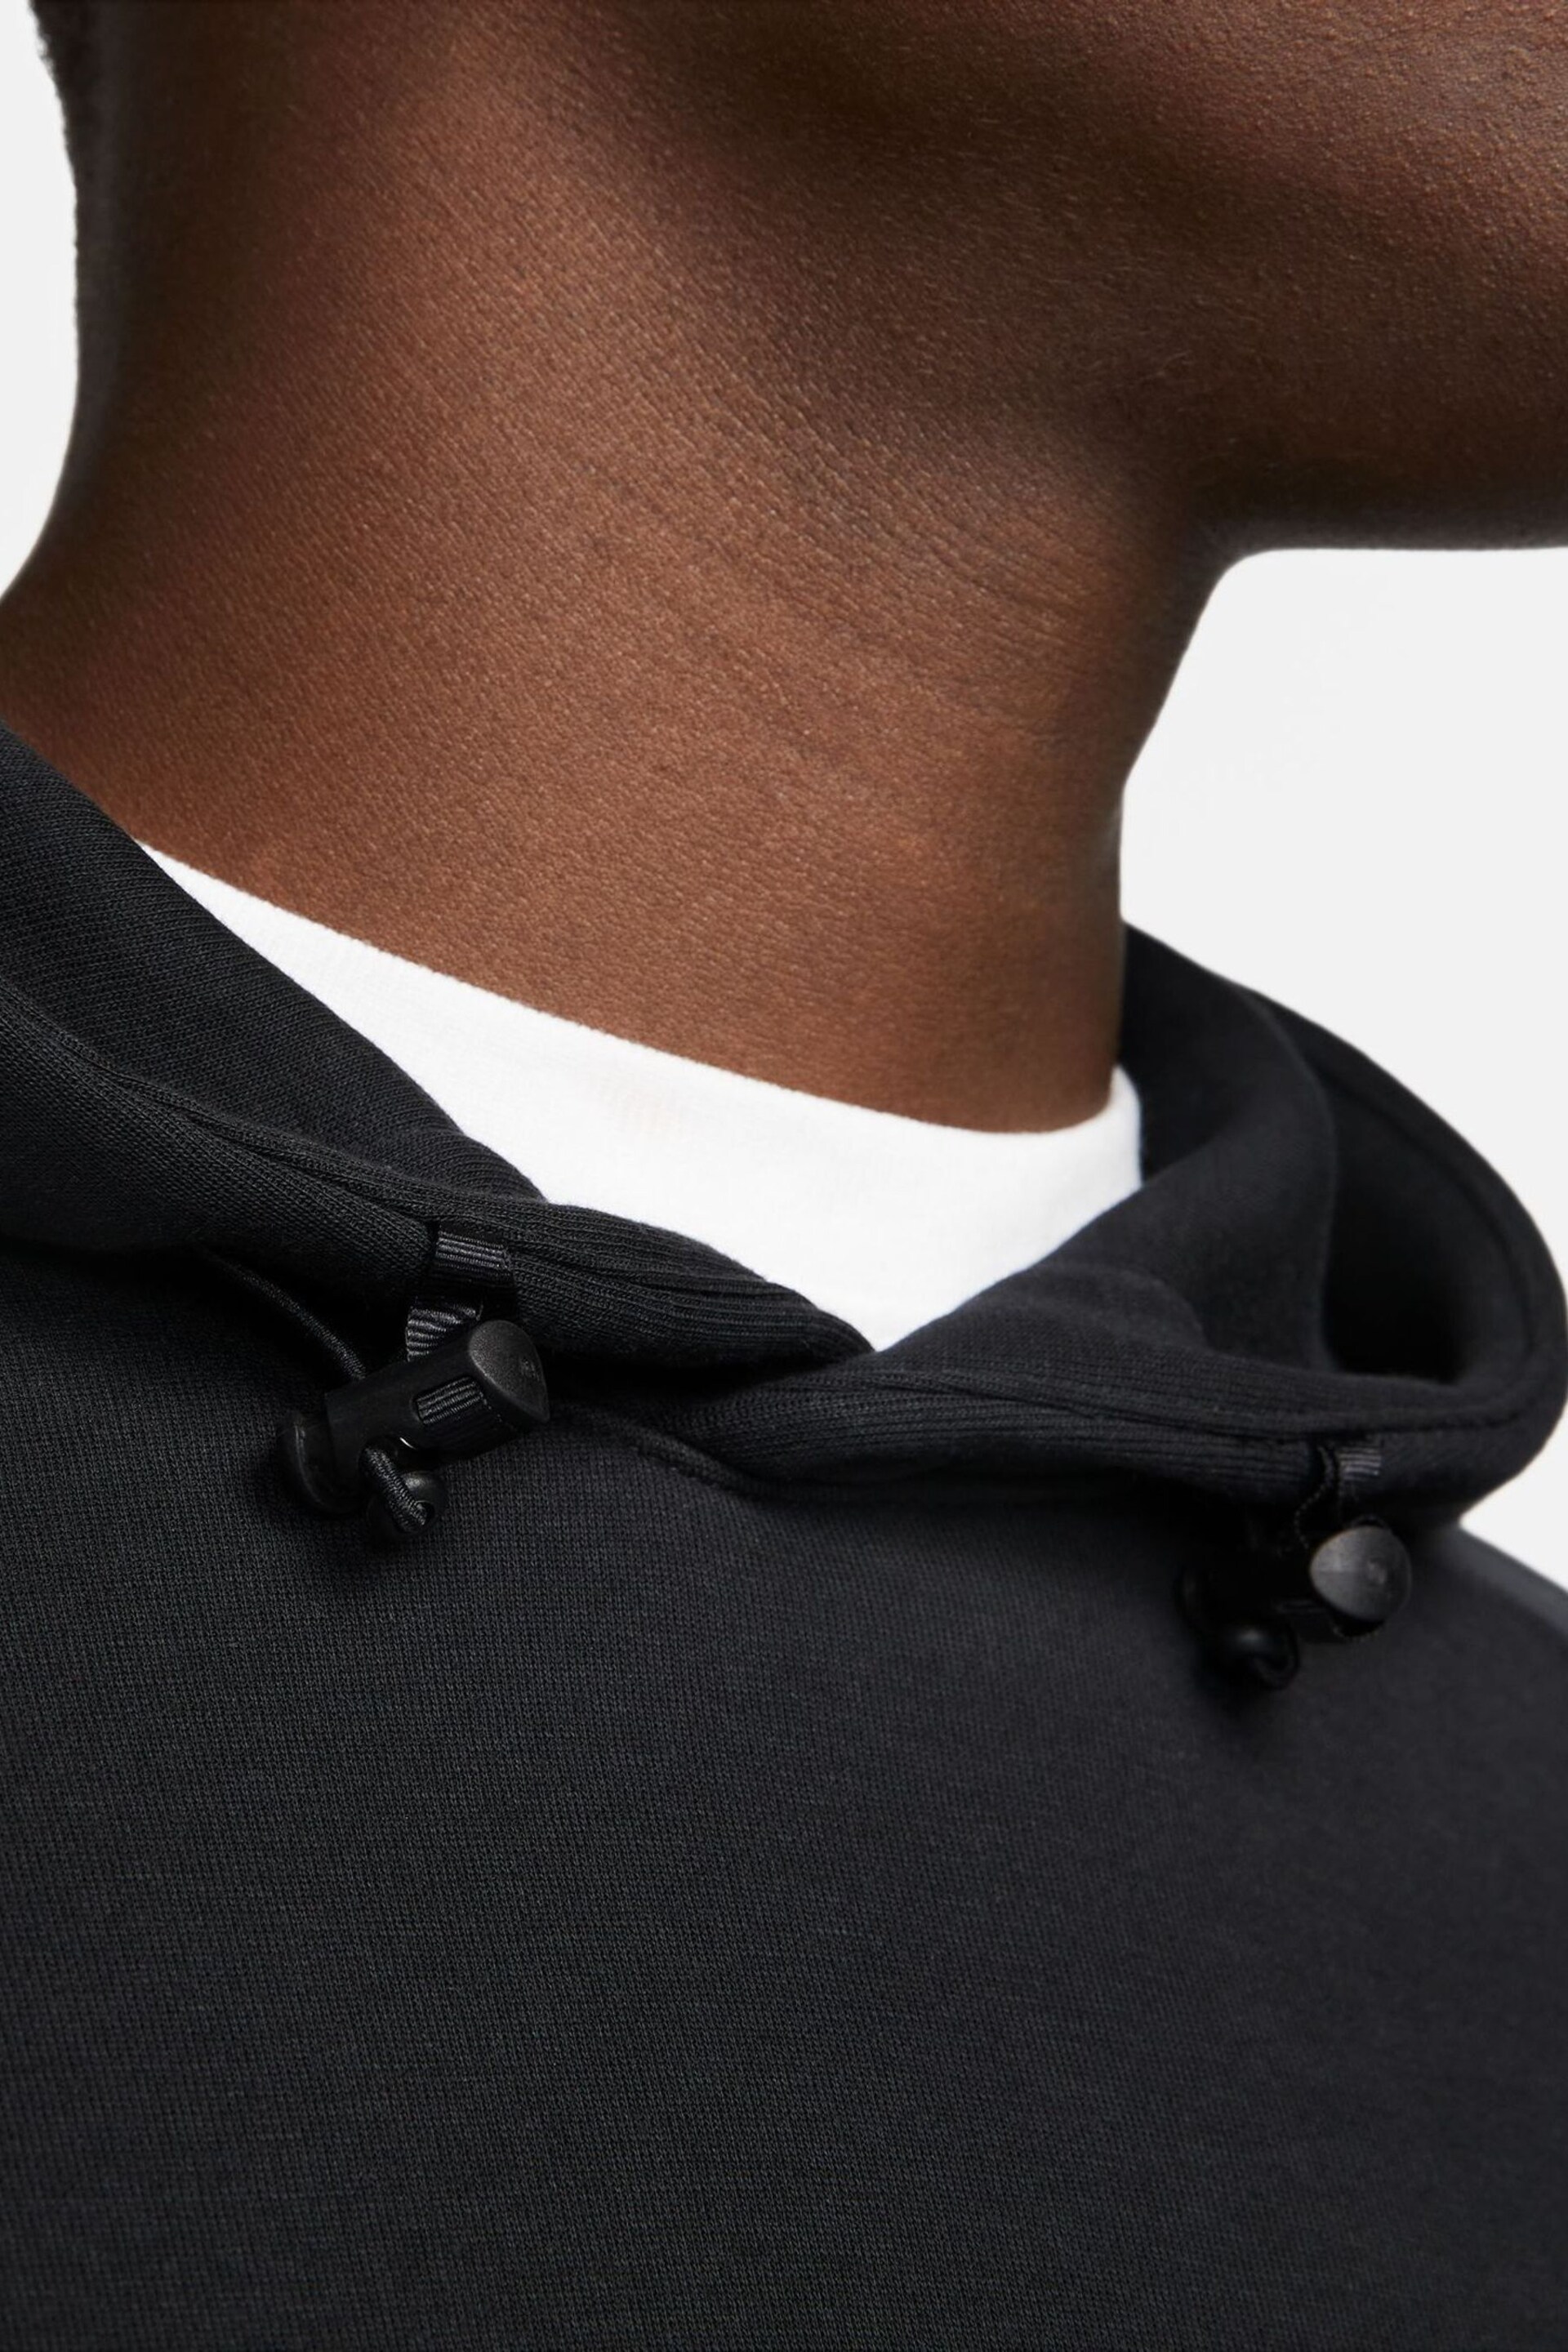 Nike Black Tech Fleece Pullover Hoodie - Image 10 of 16